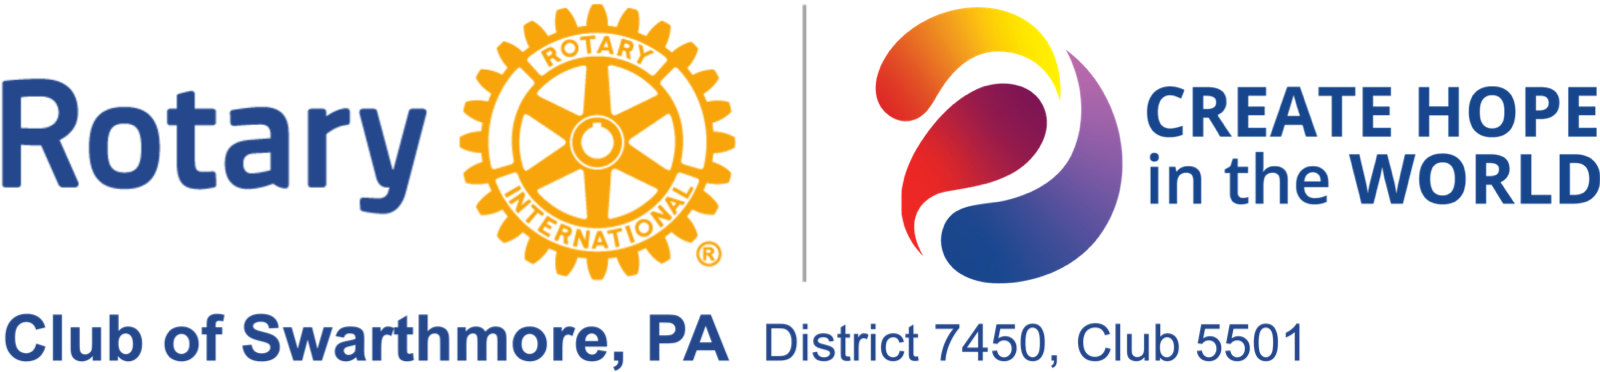 Rotary Club of Swarthmore PA